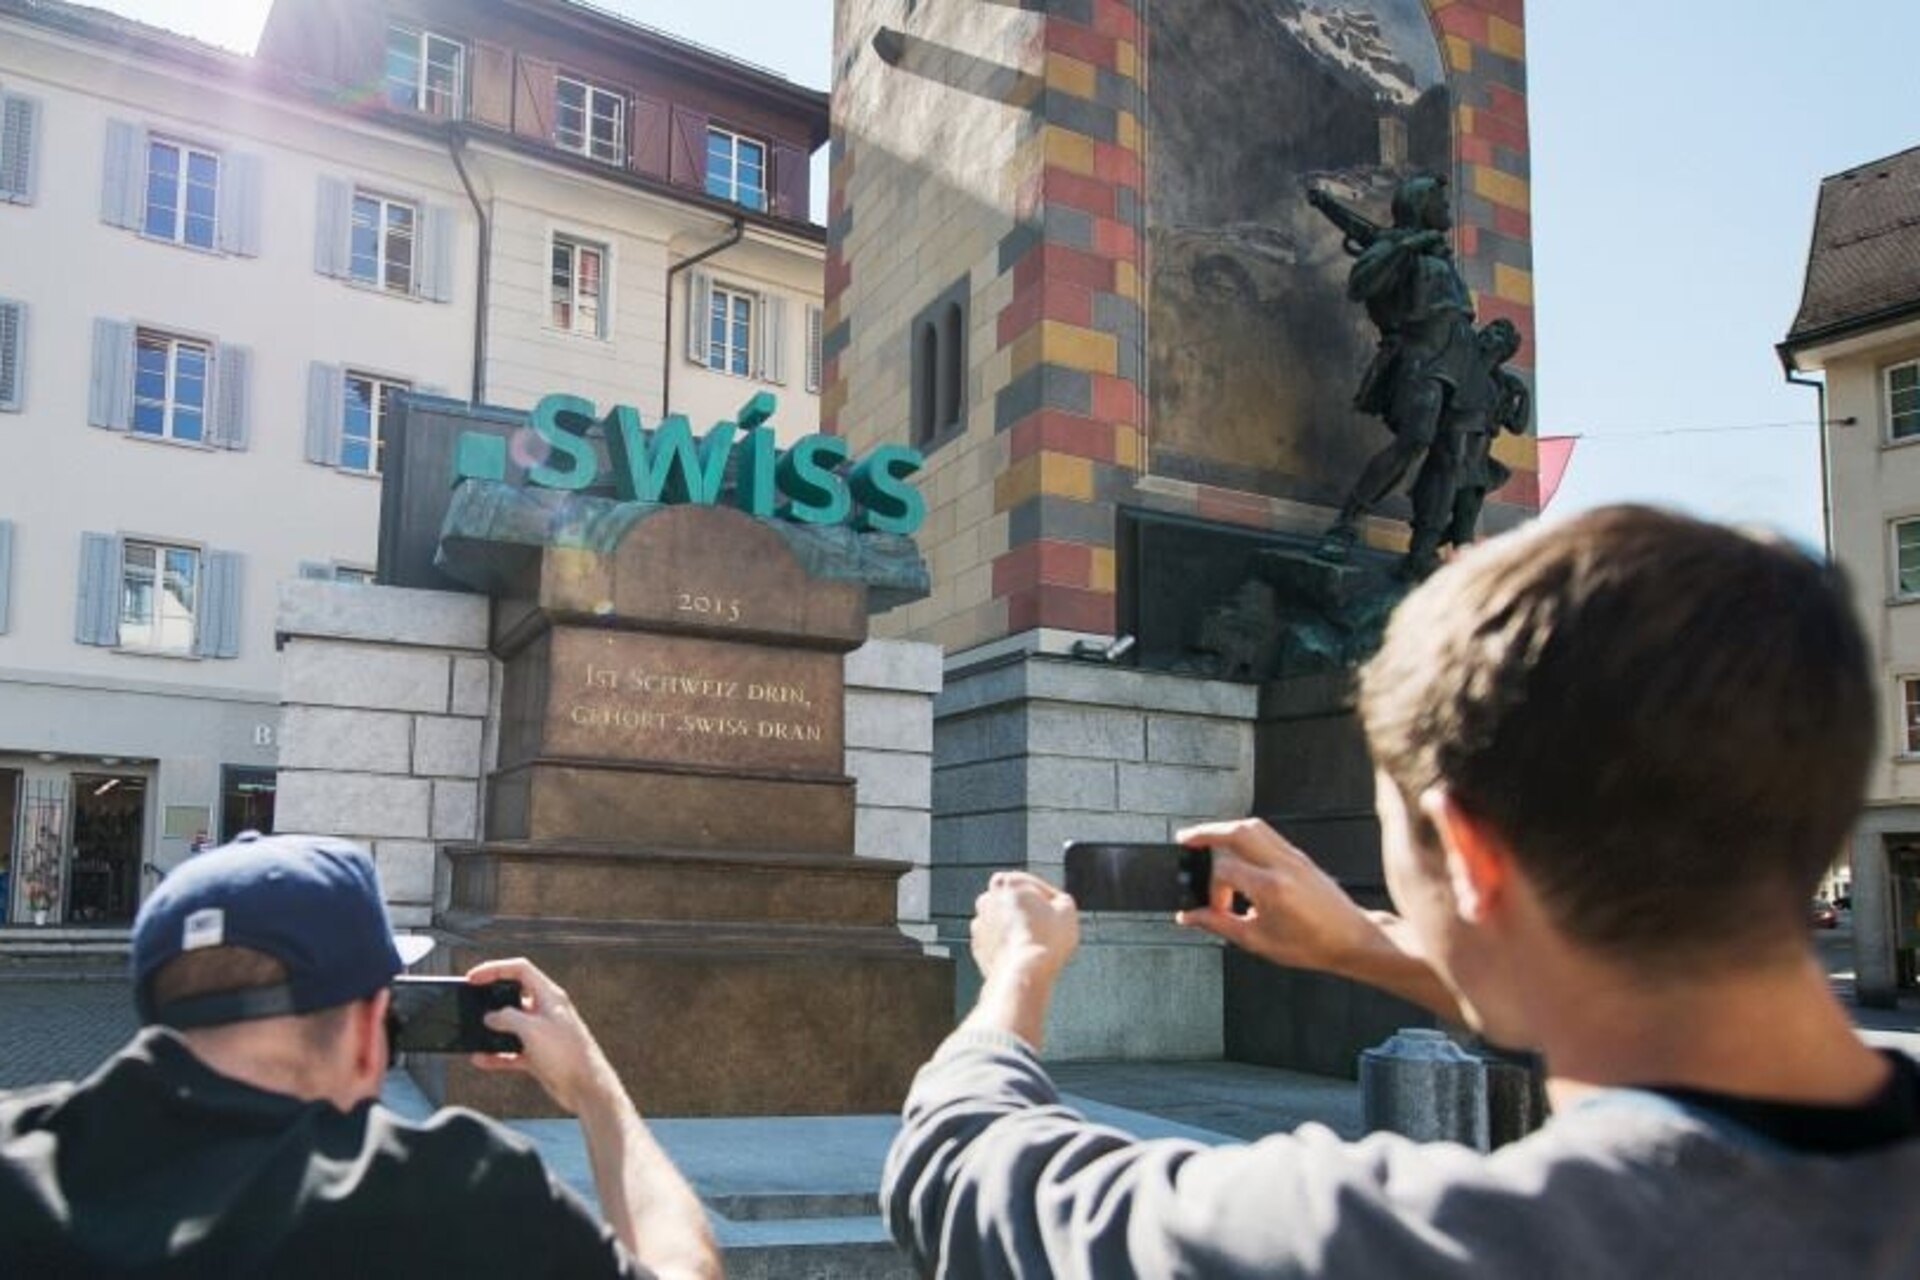 .swiss: ».swiss« vrhnja domena Švice, predstavljena poleg Williama Tella v zgodovinskem središču Altdorfa